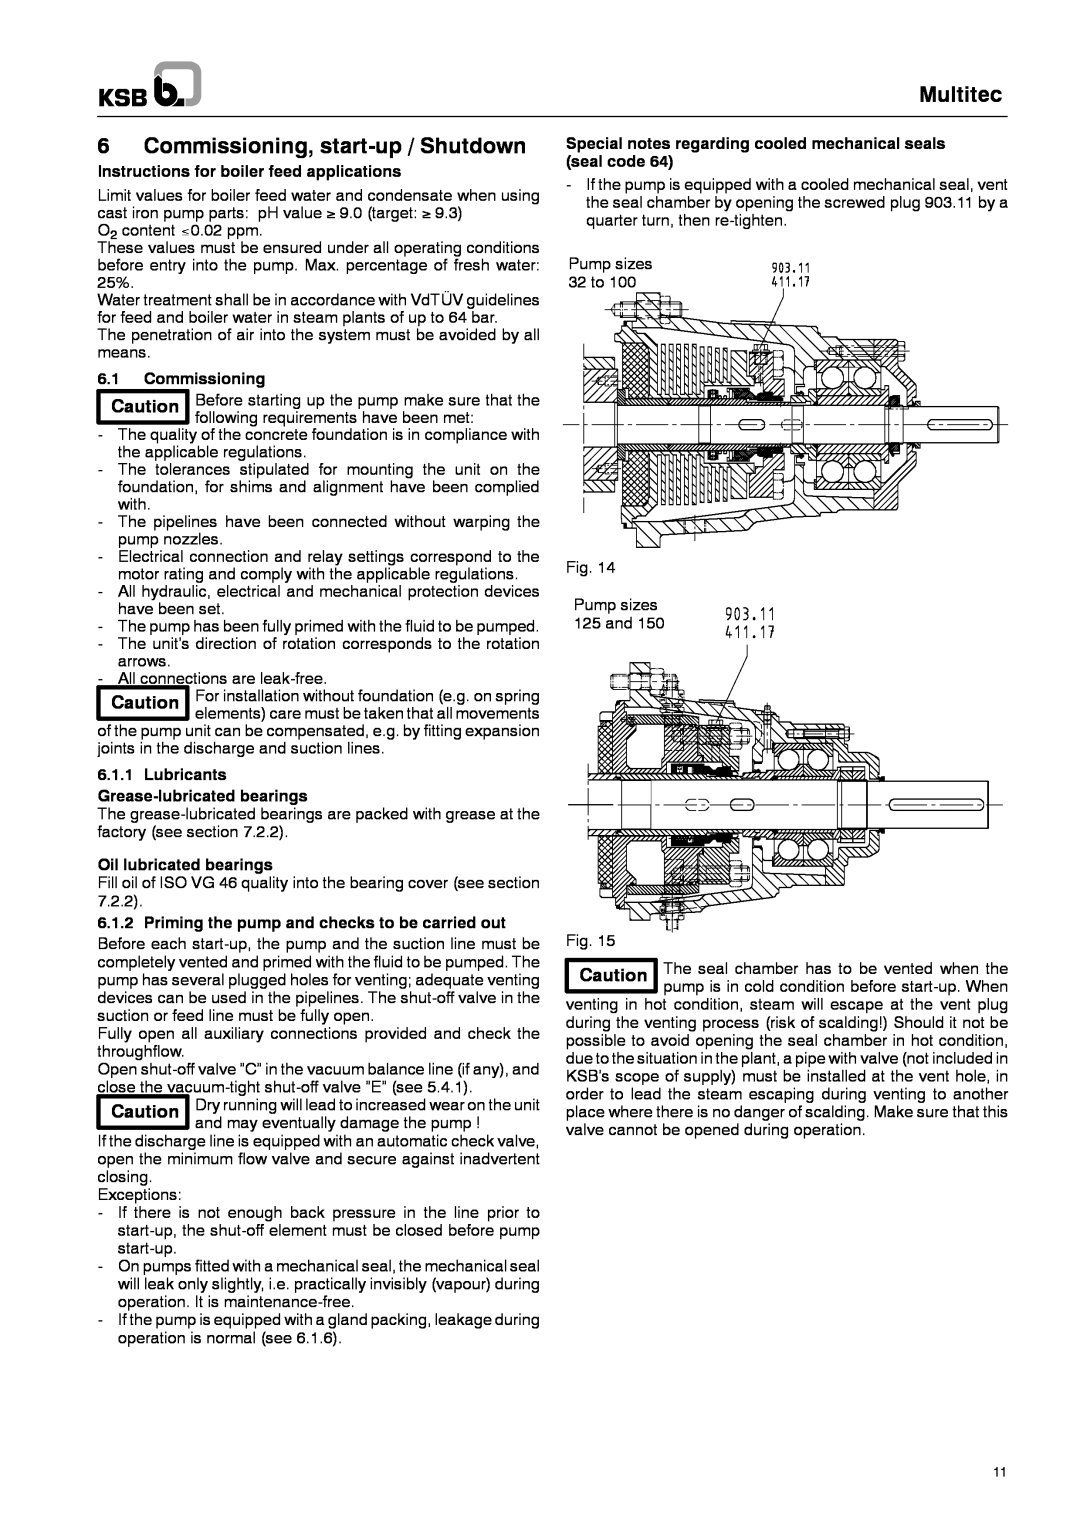 Multitech 1777.8/7-10 G3 6Commissioning, start-up /Shutdown, Multitec, Instructions for boiler feed applications 